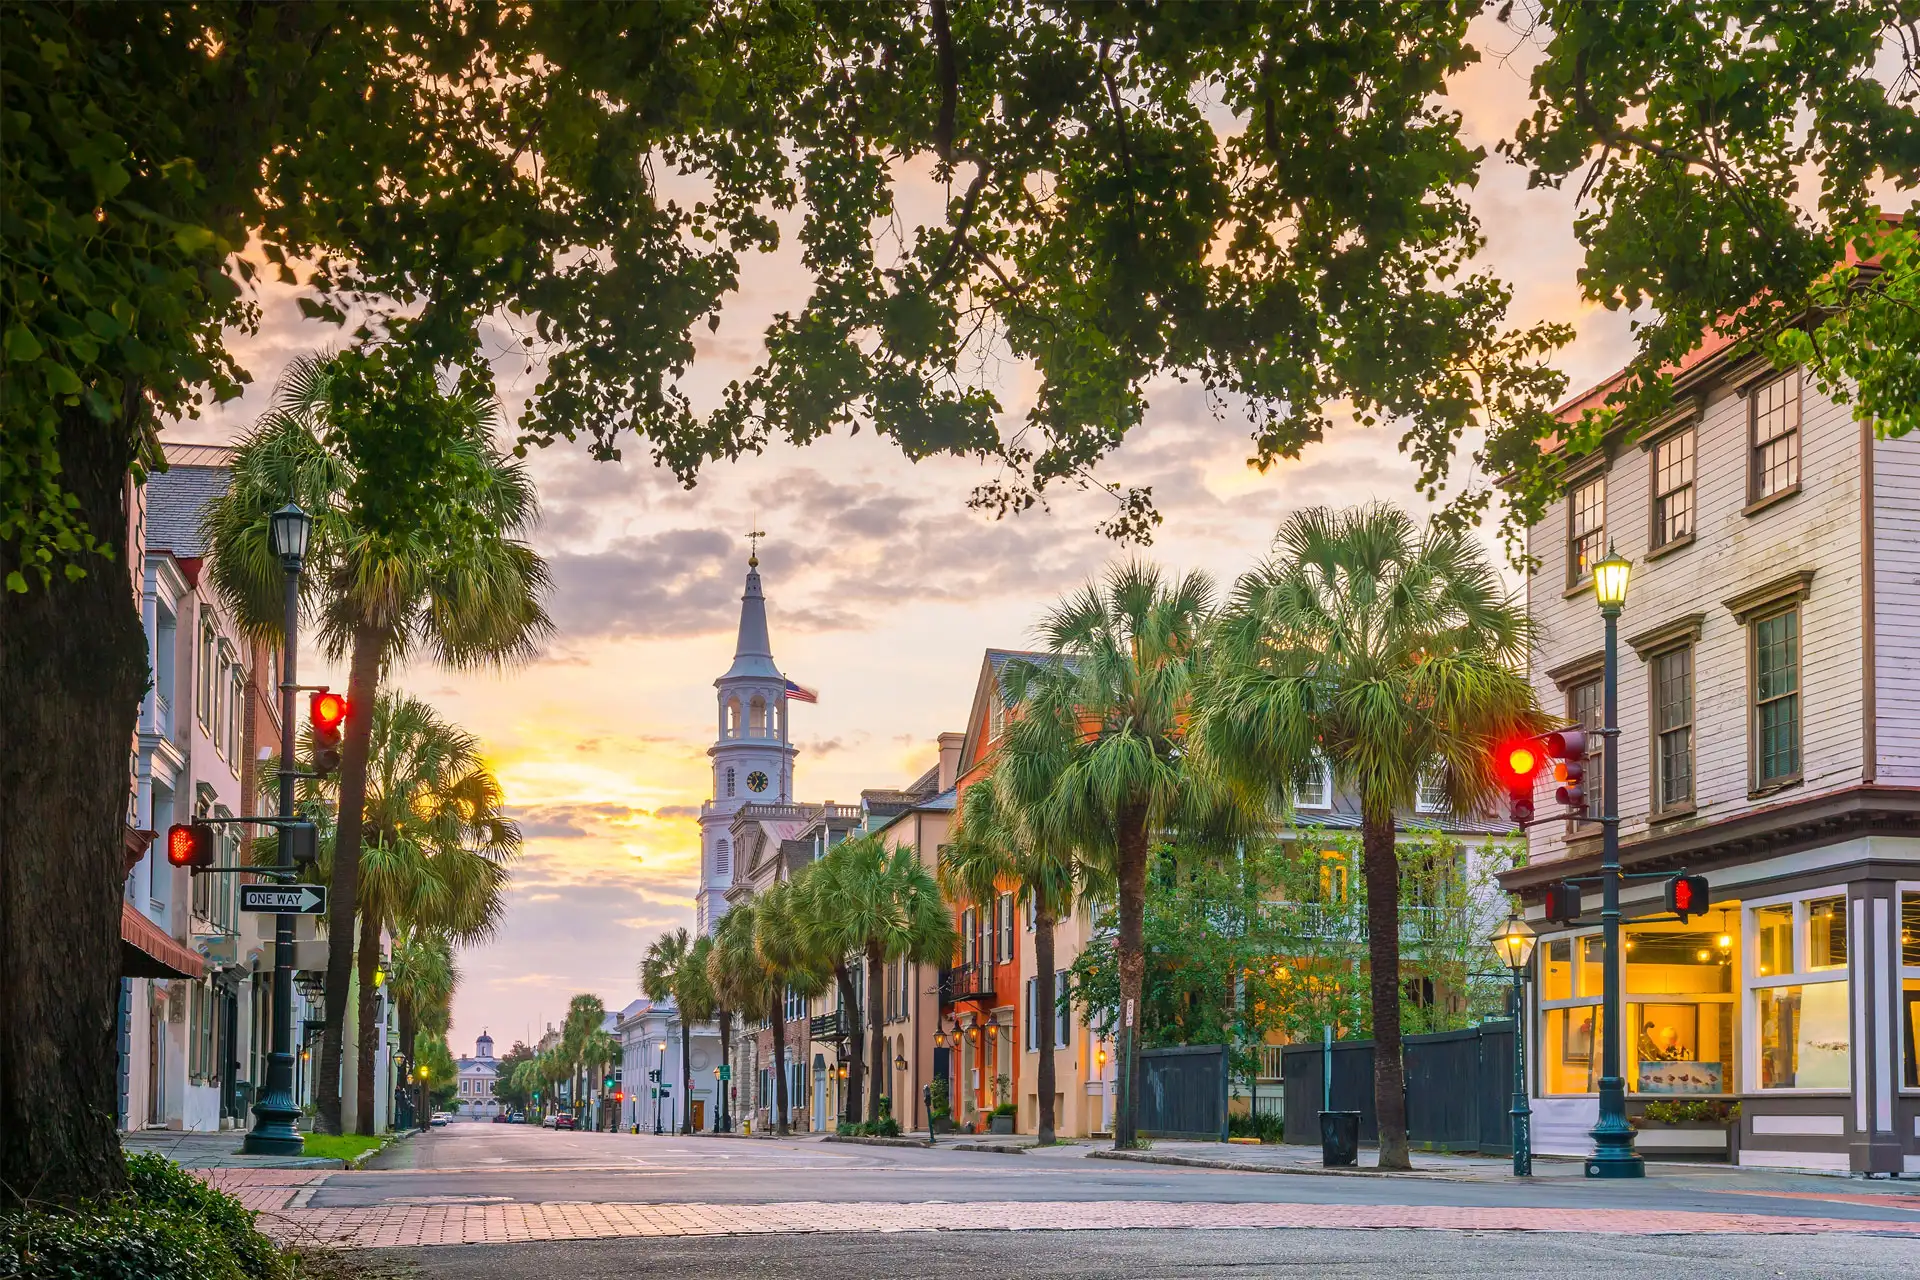 Charleston, South Carolina; Courtesy of f11photo/Shutterstock.com